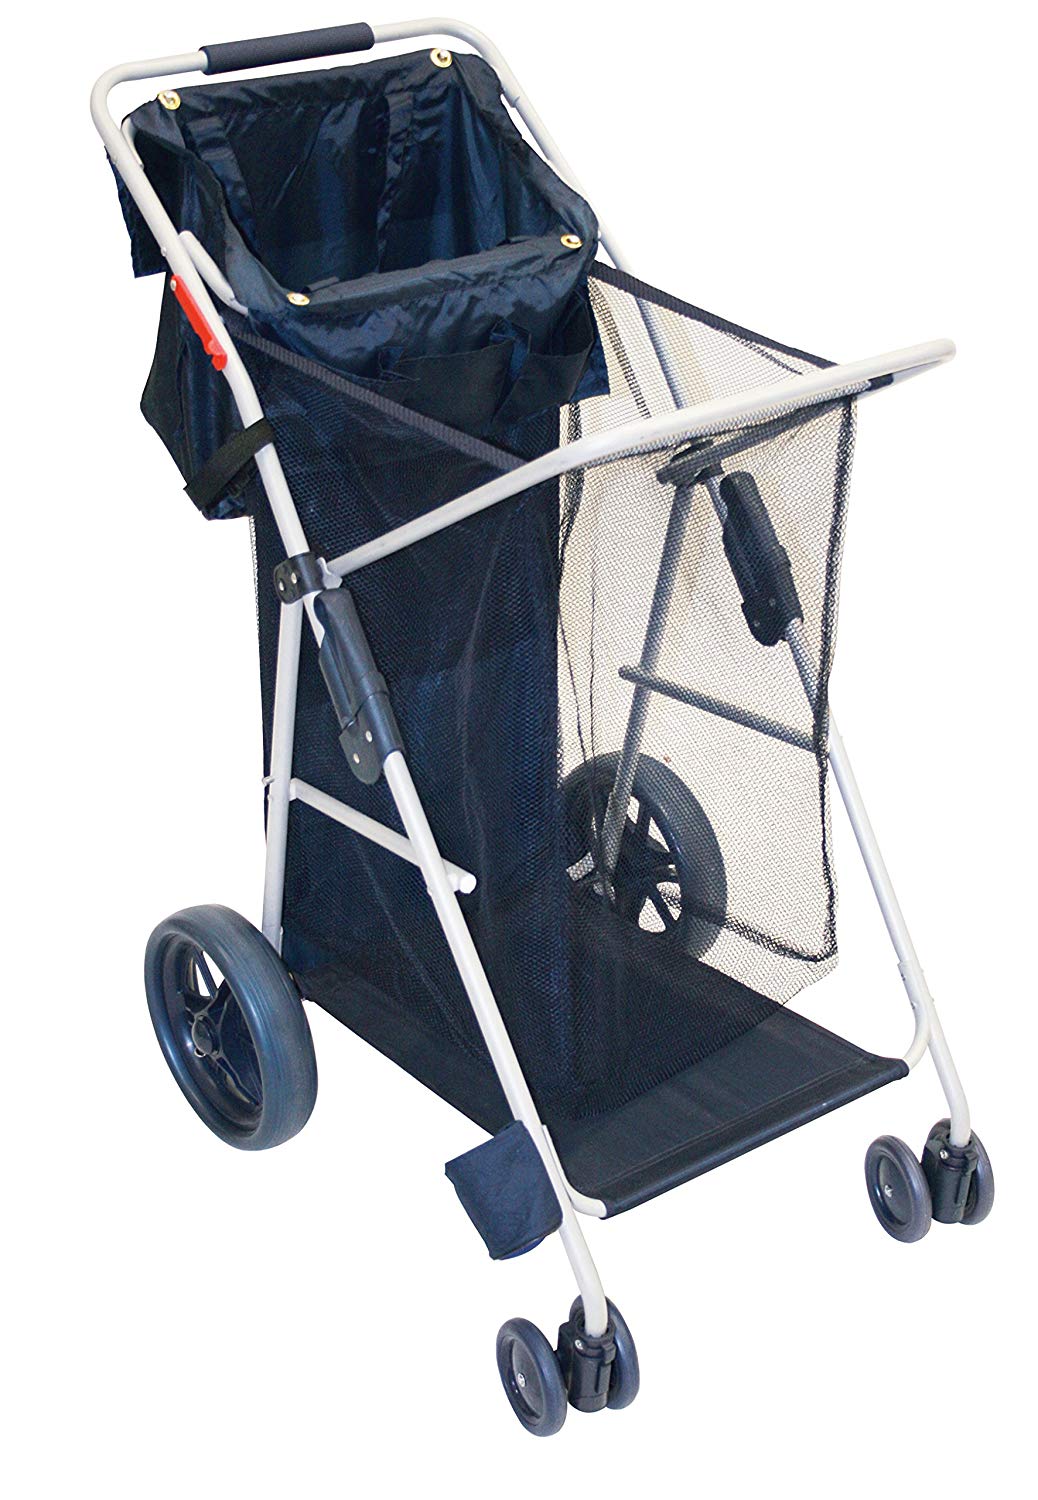 RIO Gear Wonder Wheeler Big Wheel Folding Beach or Sports Cart with Tote Bag